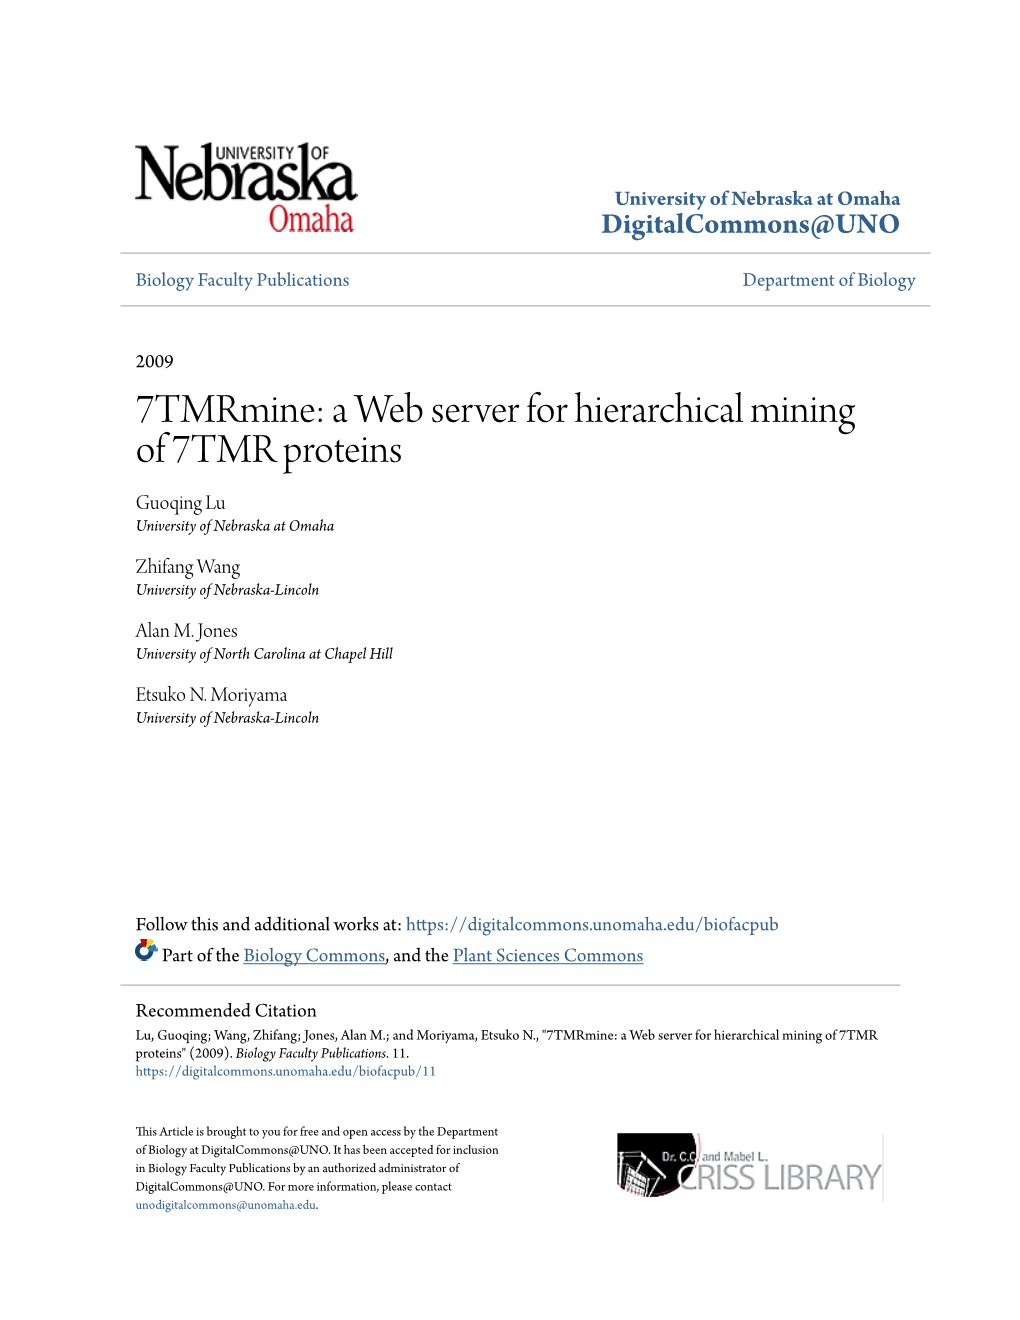 7Tmrmine: a Web Server for Hierarchical Mining of 7TMR Proteins Guoqing Lu University of Nebraska at Omaha